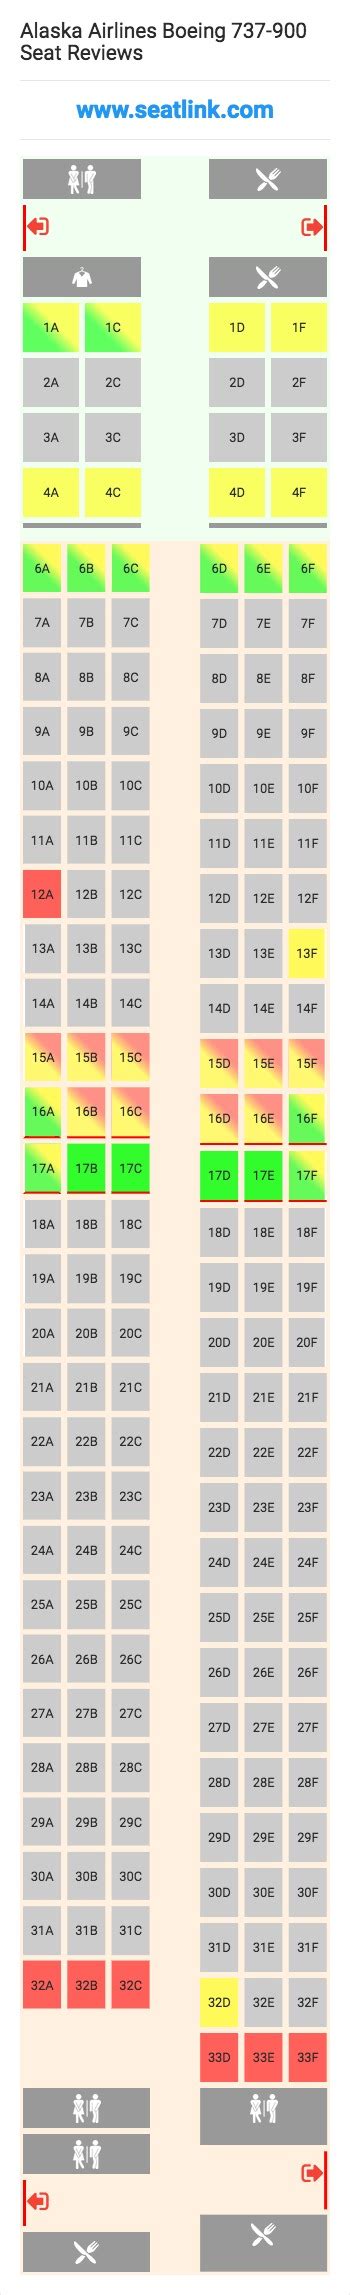 Alaska Airlines Seating Chart Boeing Tutorial Pics